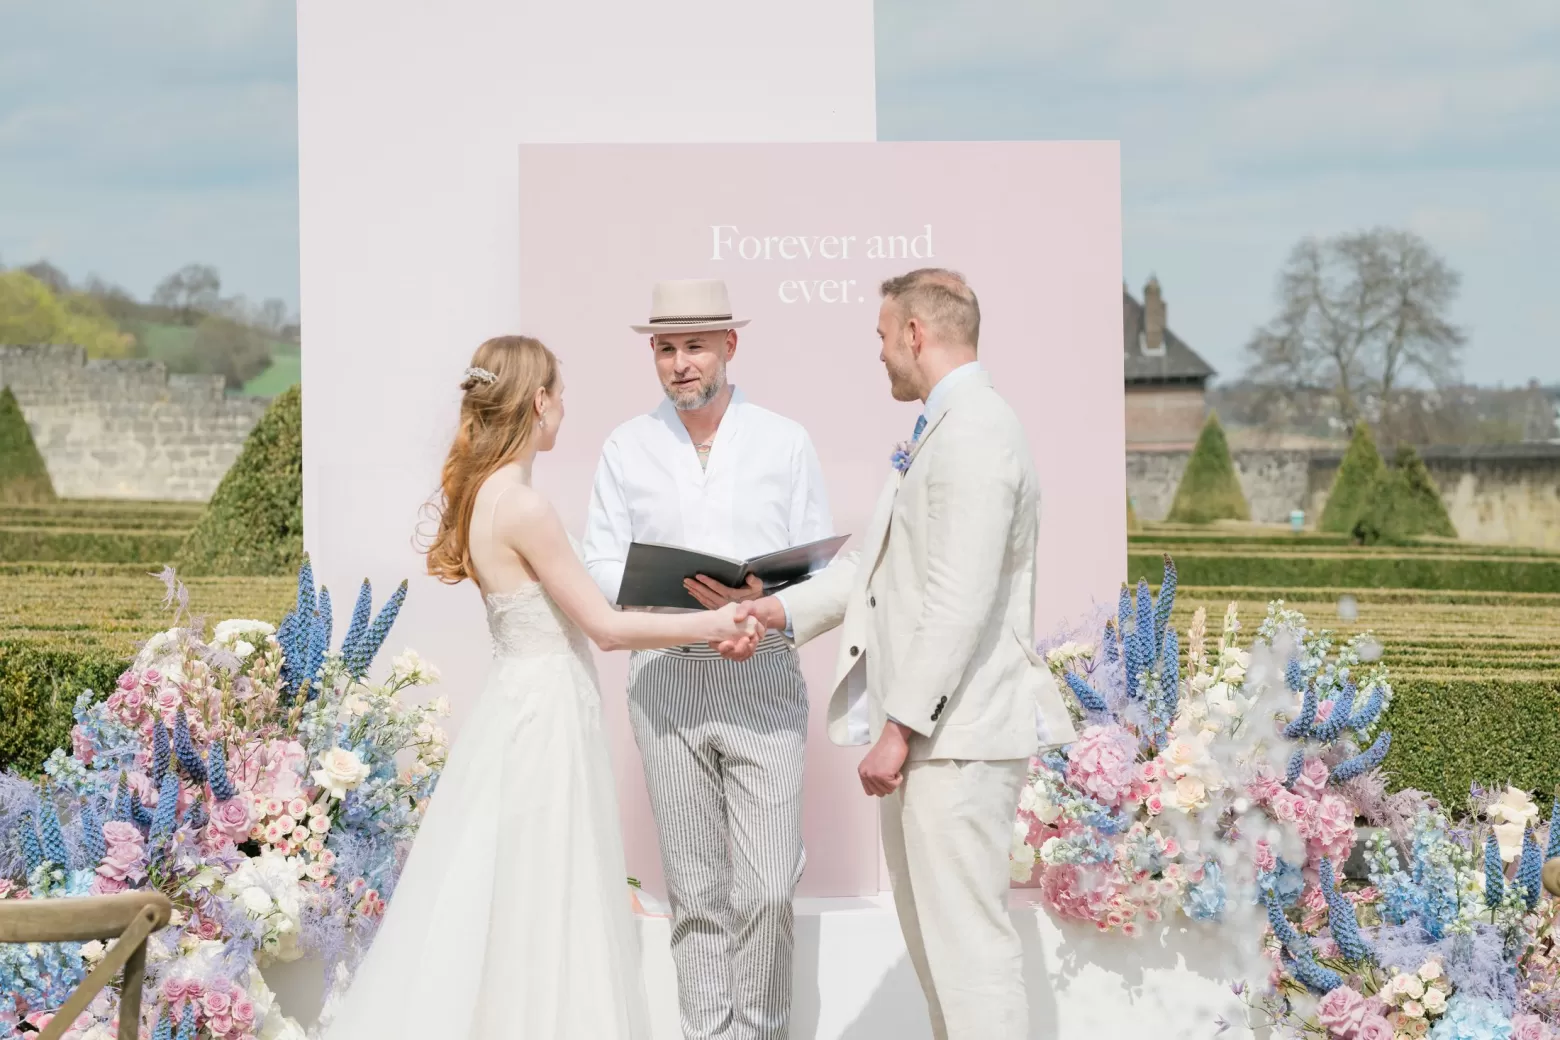 Wedding ceremony backdrop floral arrangement with Delphinium, Clematis Amazing®